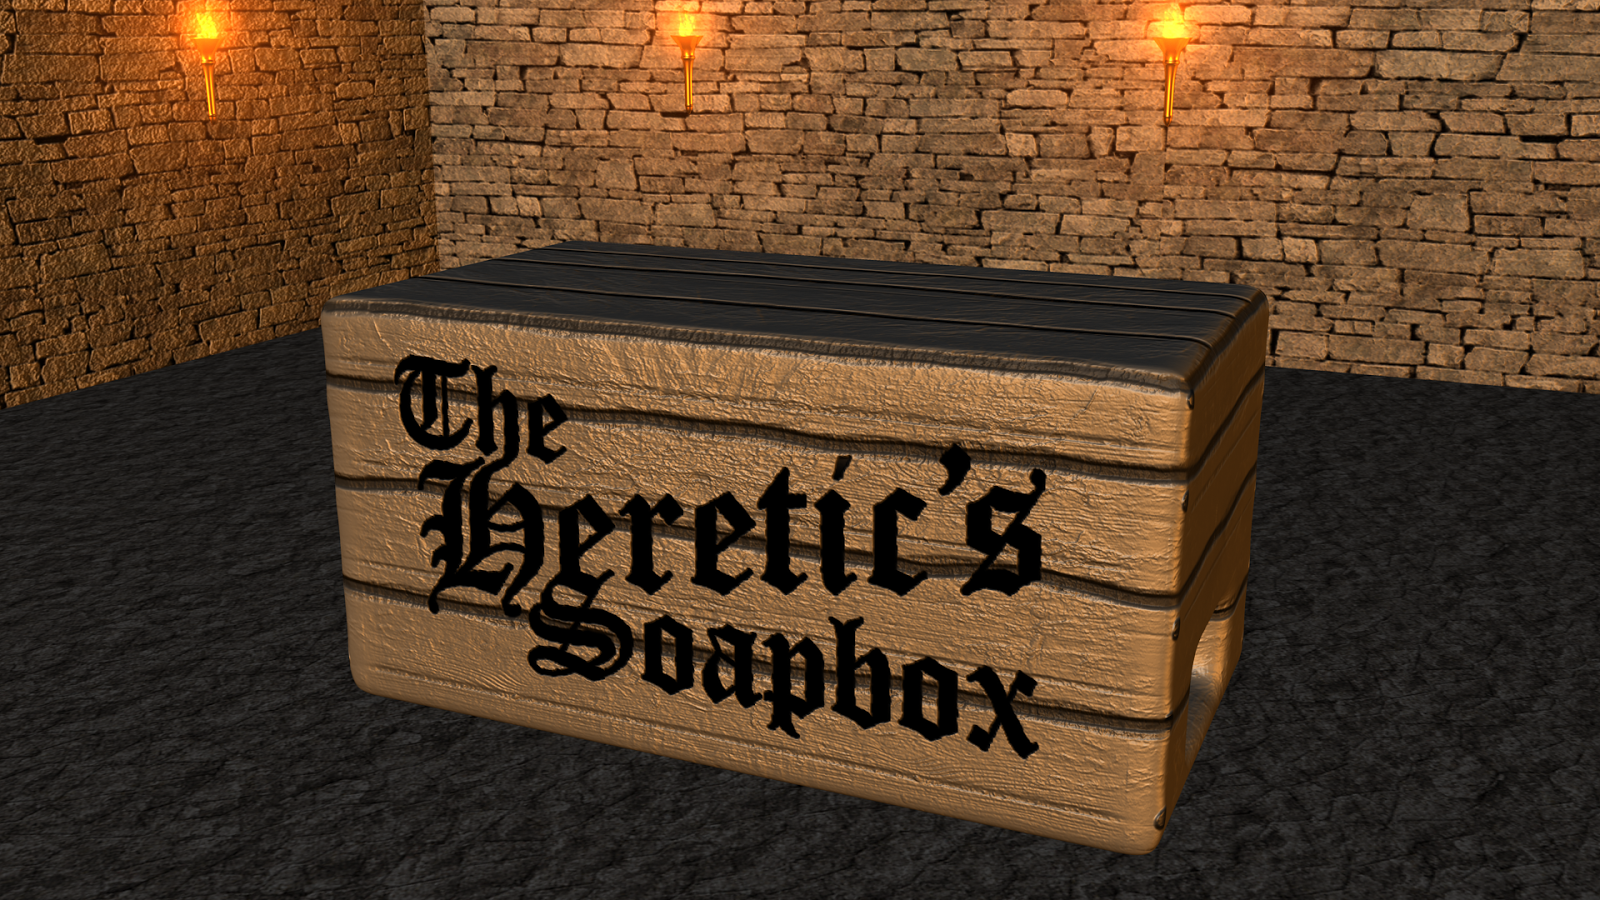 The Heretic's Soapbox